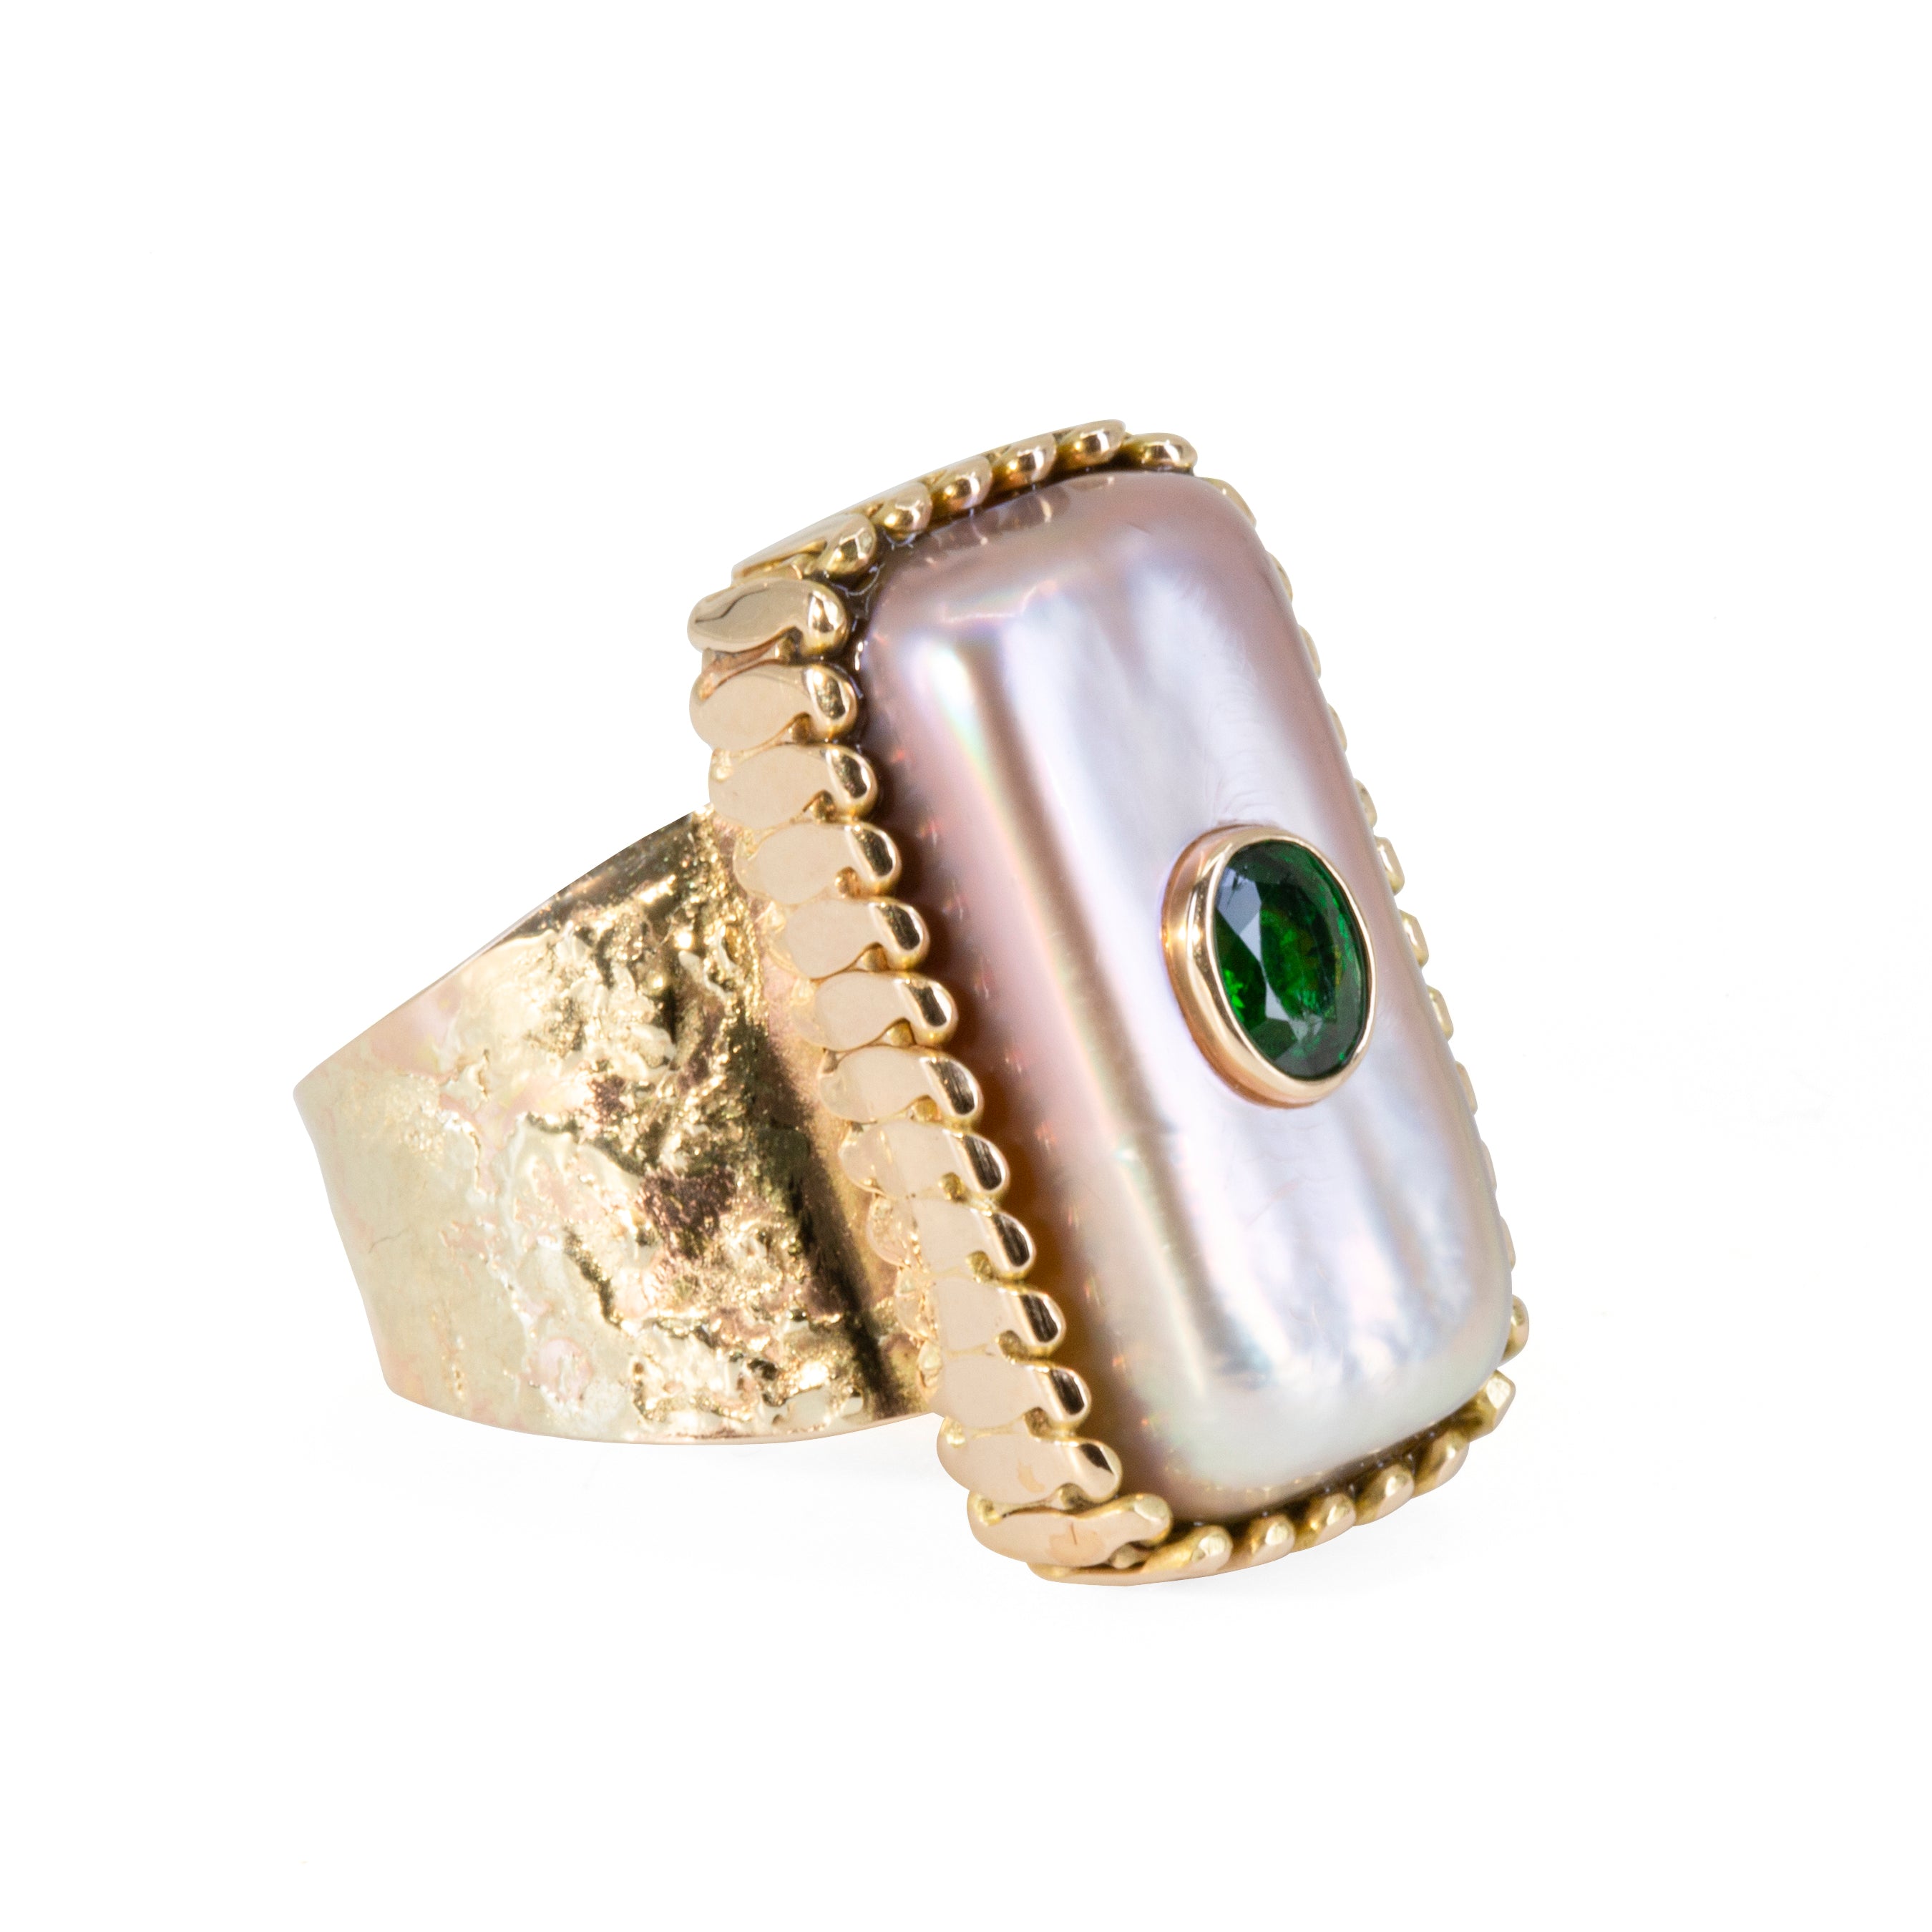 Pearl 11.24 carat with Tsavorite Garnet Handcrafted 14k Gold Ring - VO-171 - Crystalarium